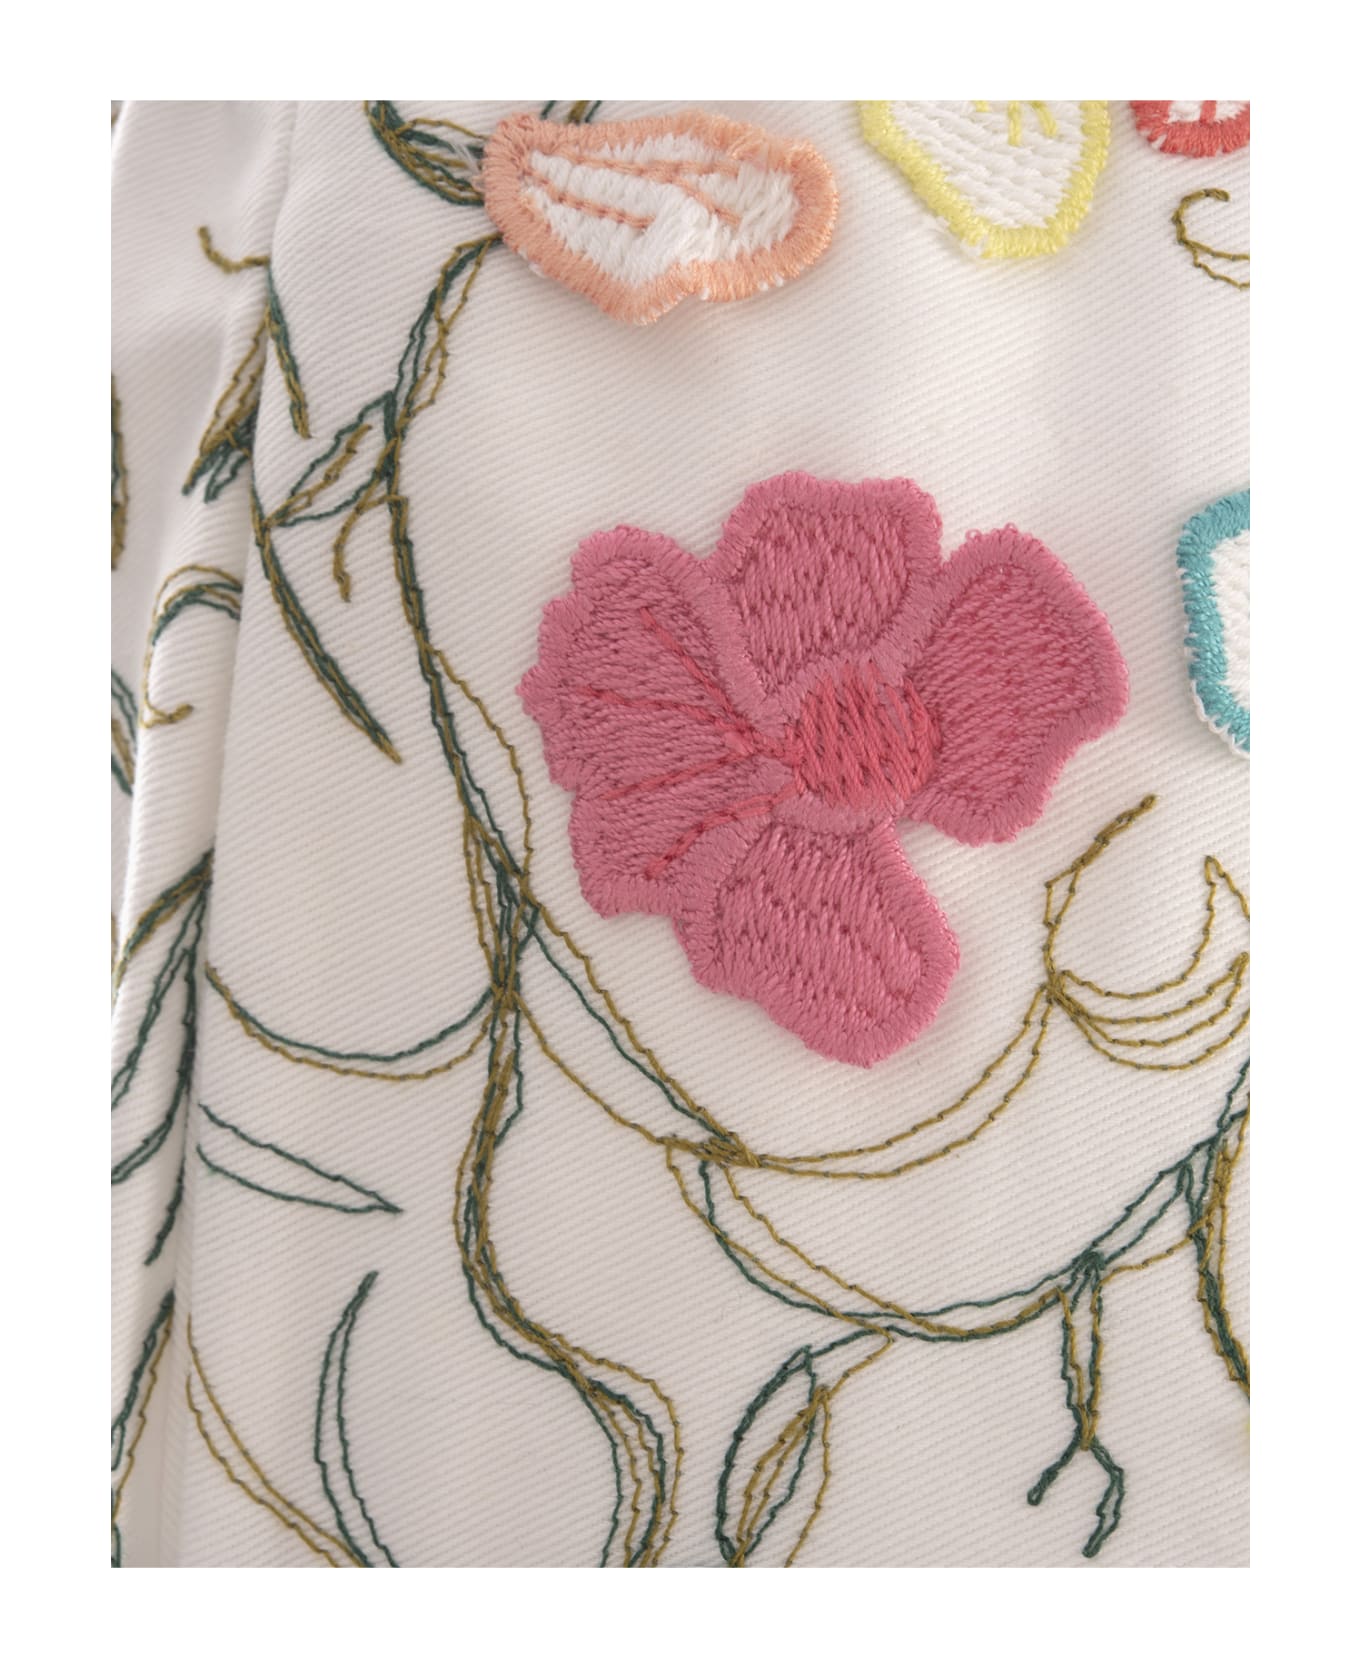 Elie Saab Cotton Embroidered Garden Shorts - Multicolour